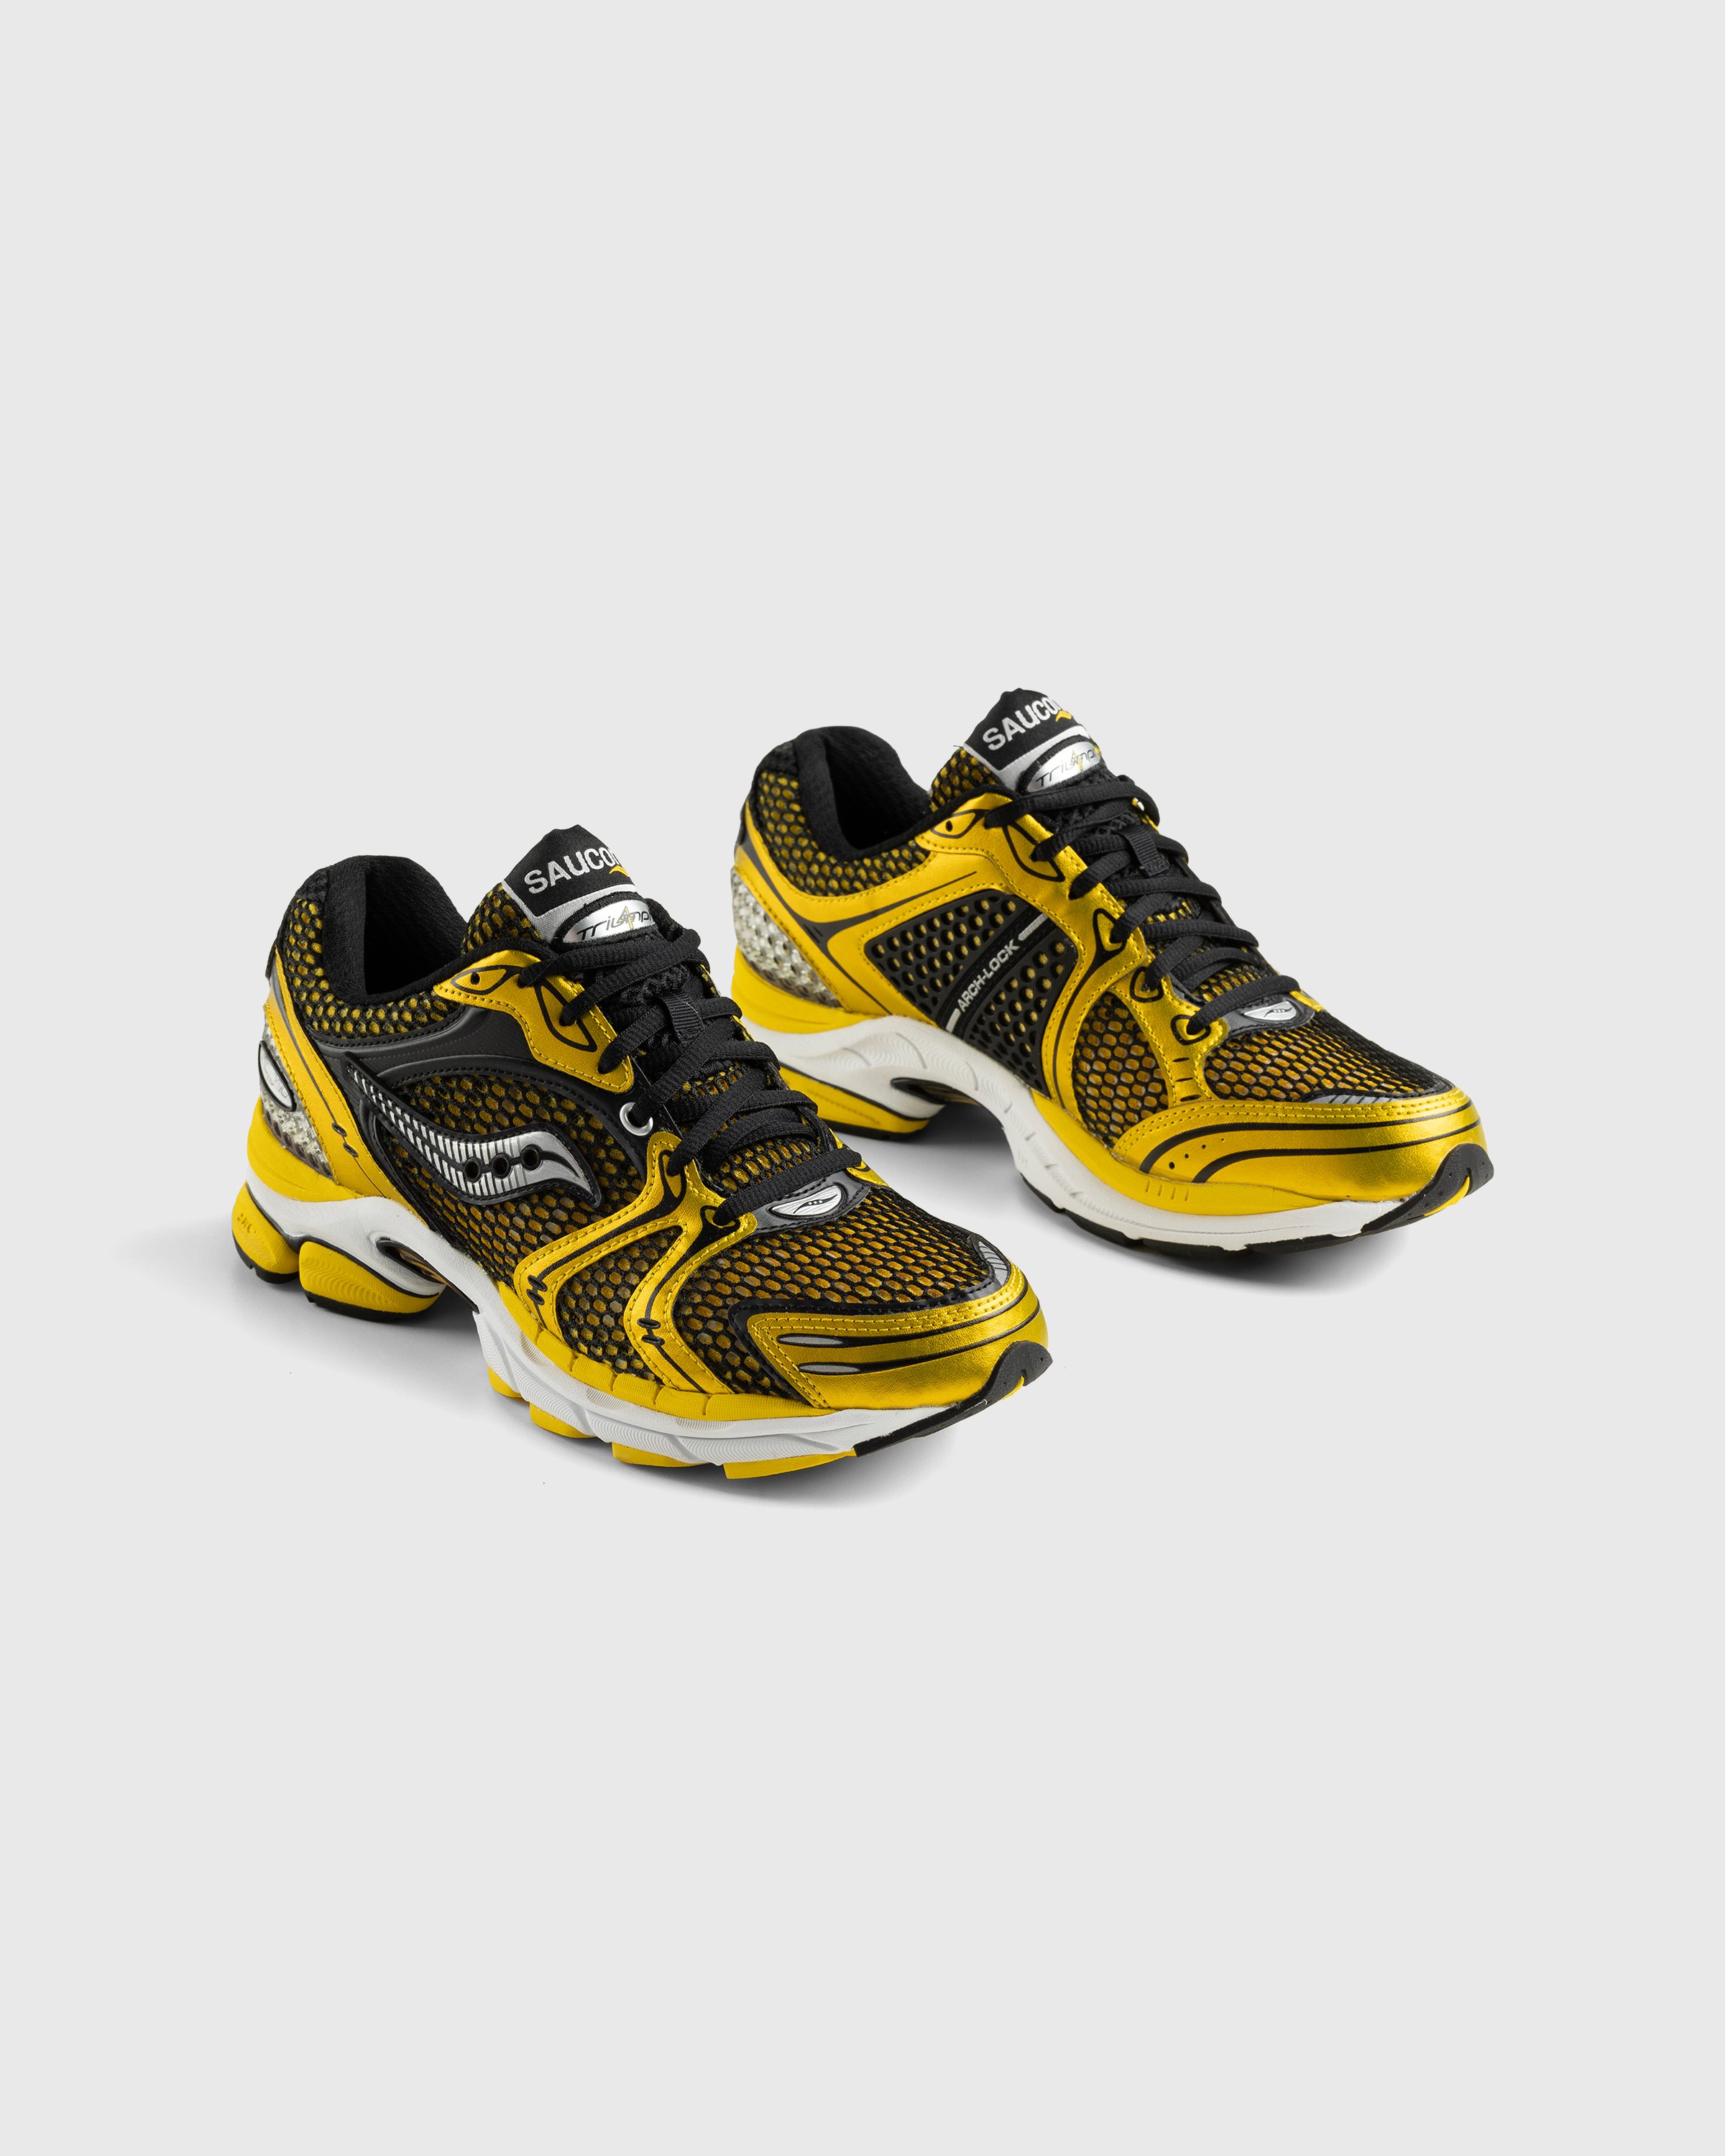 Saucony - ProGrid Triumph 4 Lemon - Footwear - Yellow - Image 3